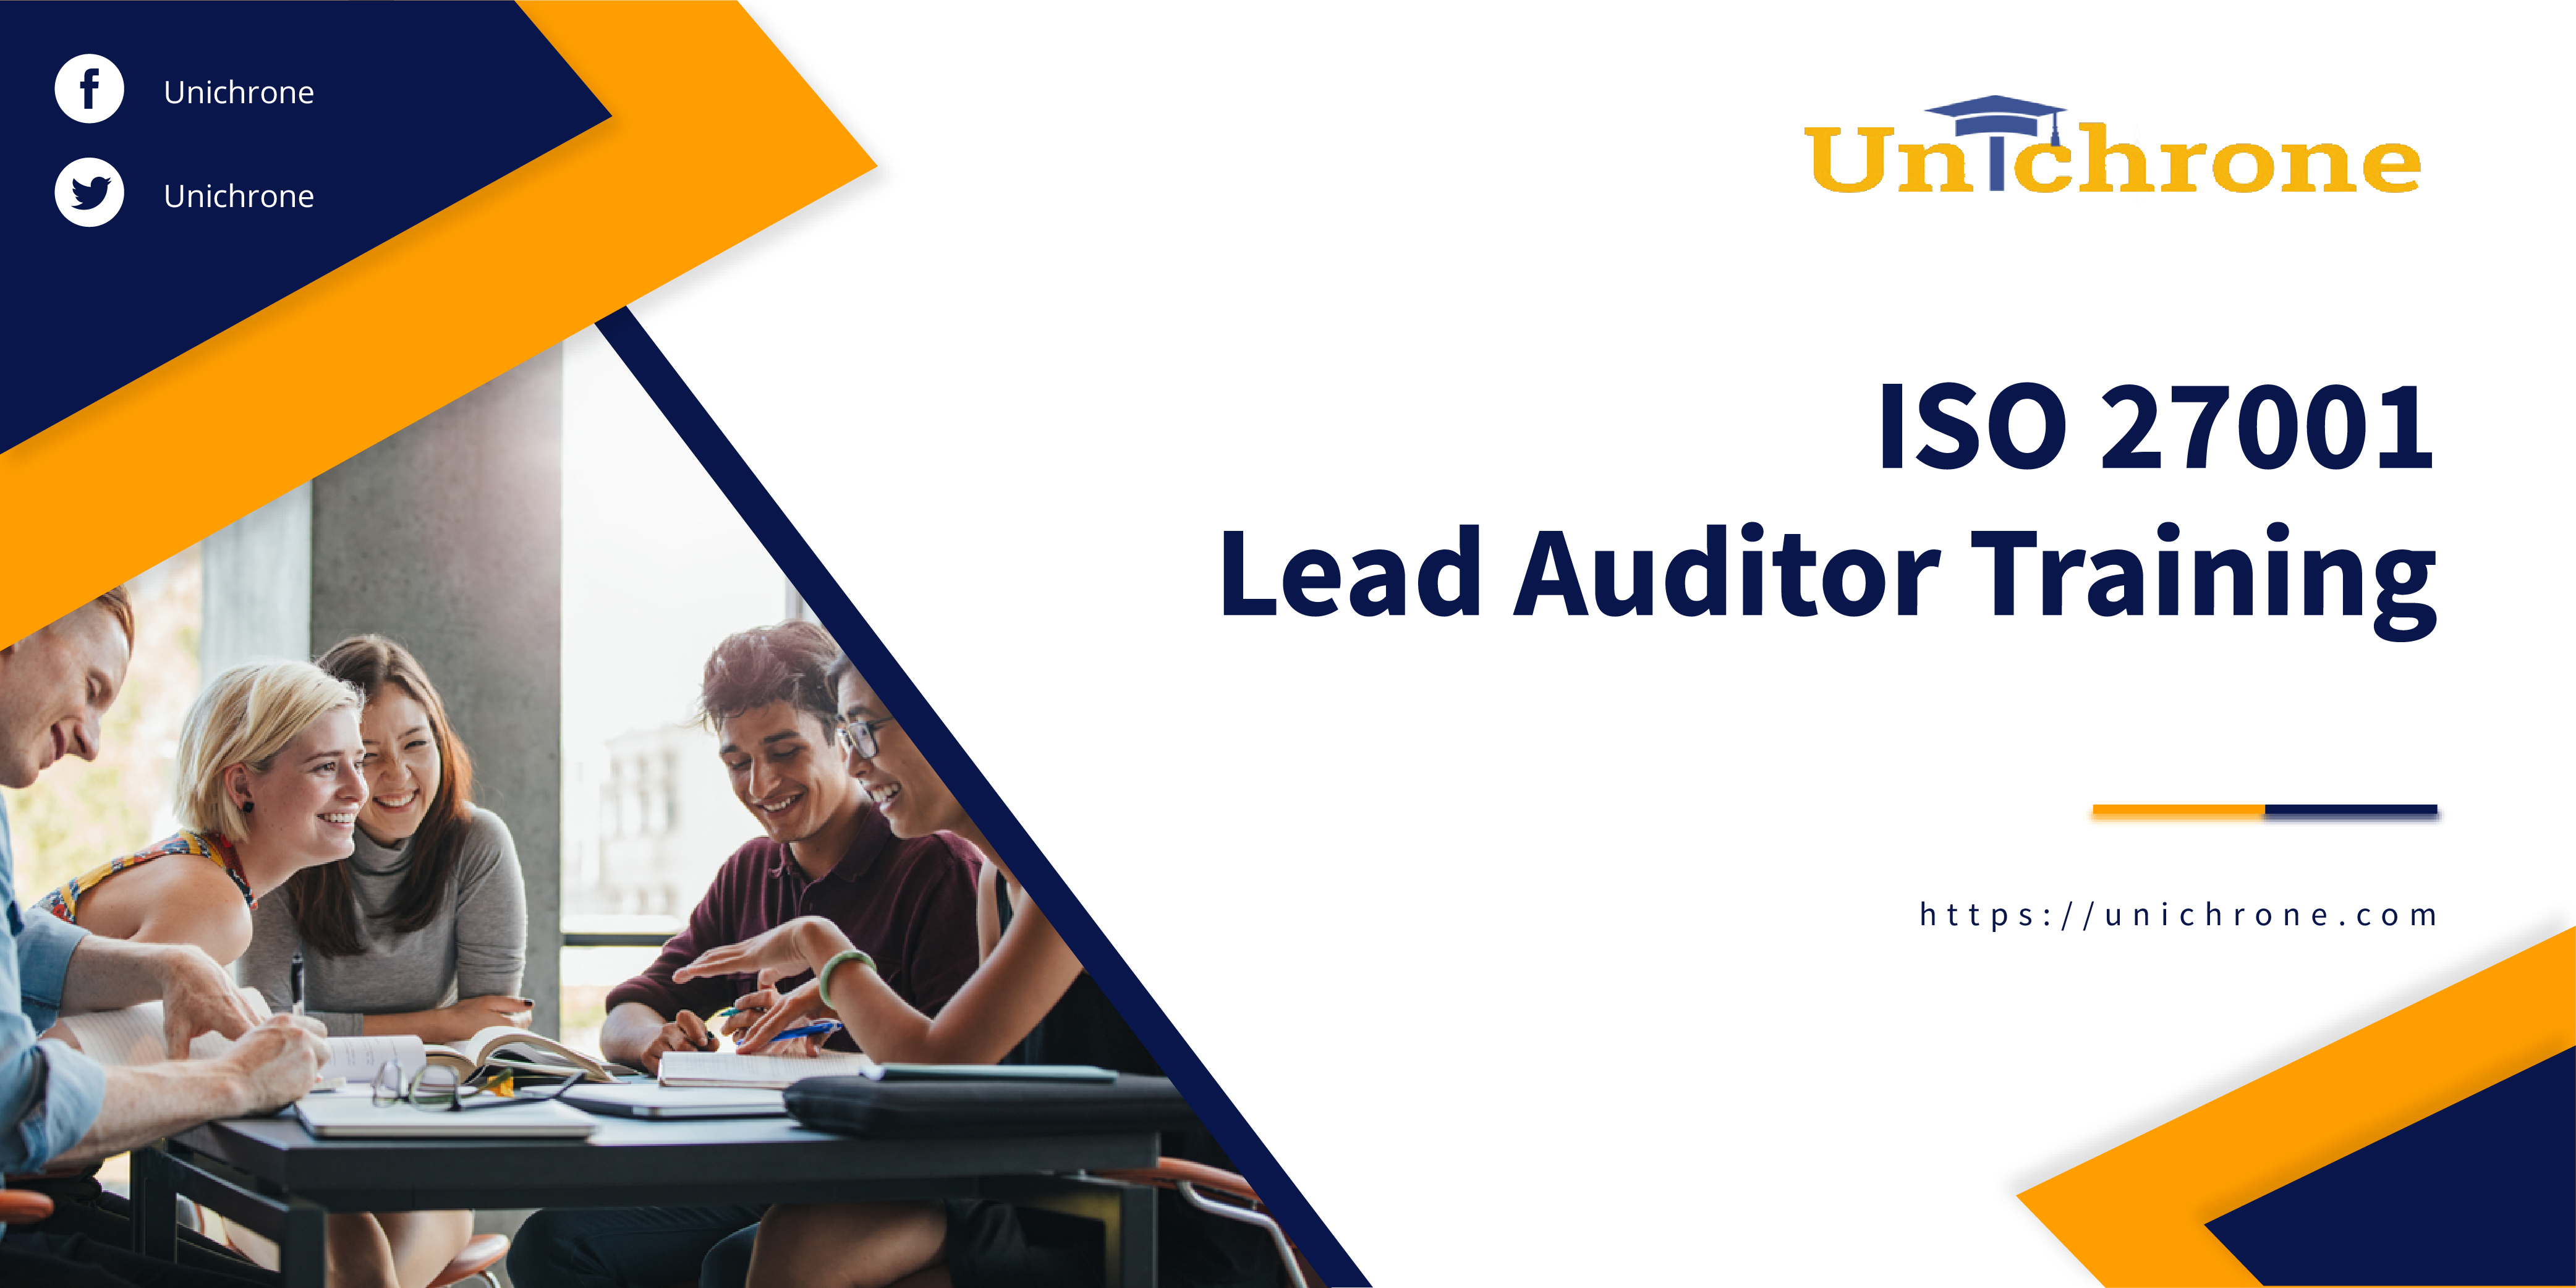 ISO 27001 Lead Auditor Training in Kuala Lumpur Malaysia, Bangalore, Kuala Lumpur, Malaysia